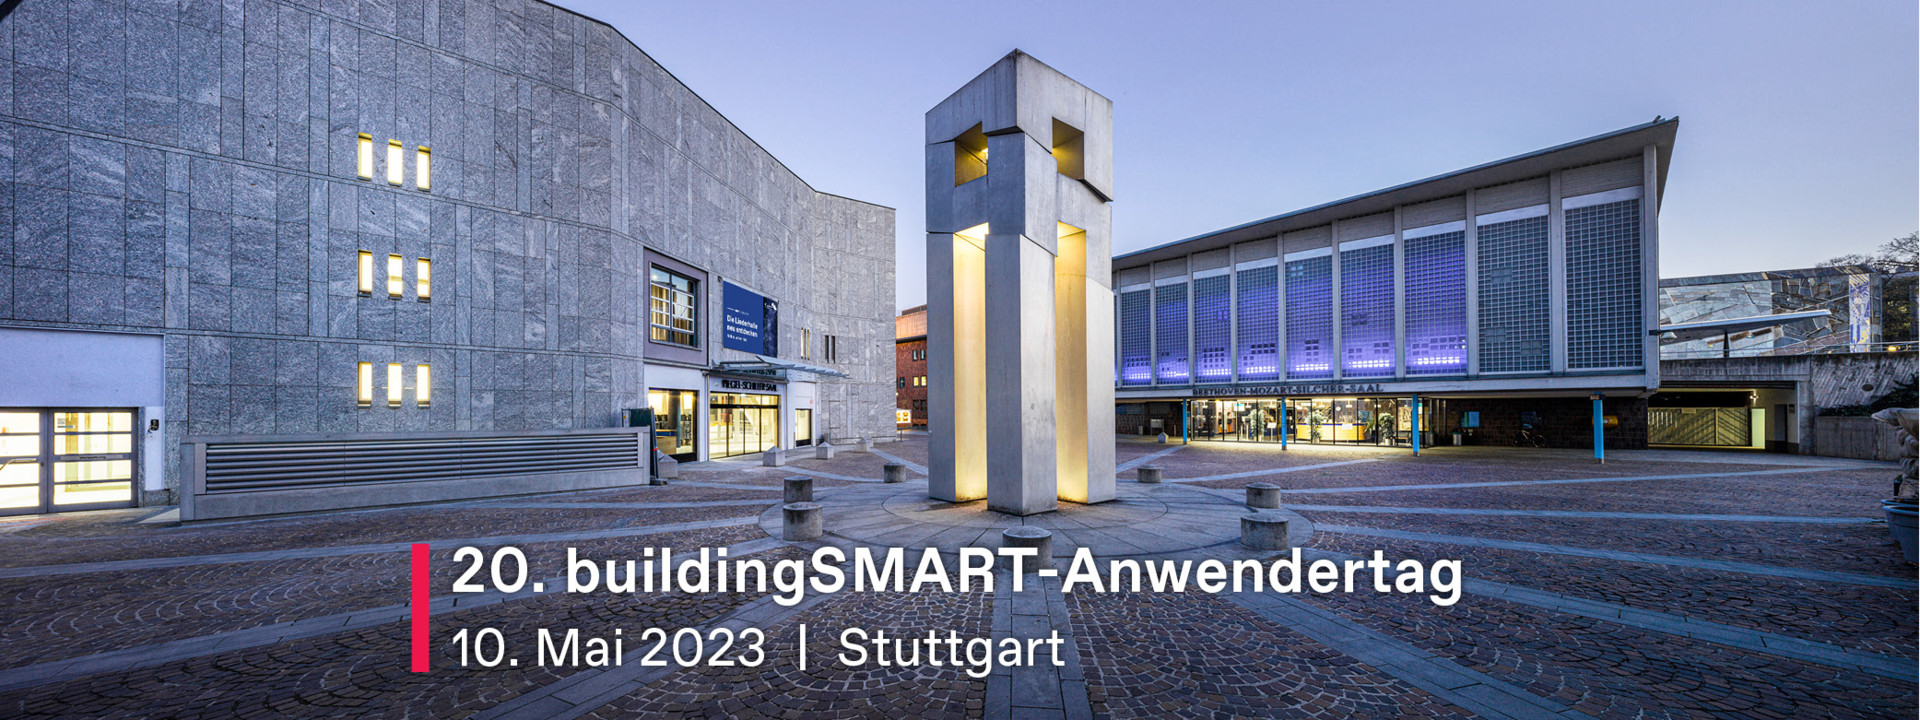 20. buildingSMART-Anwendertag in Stuttgart